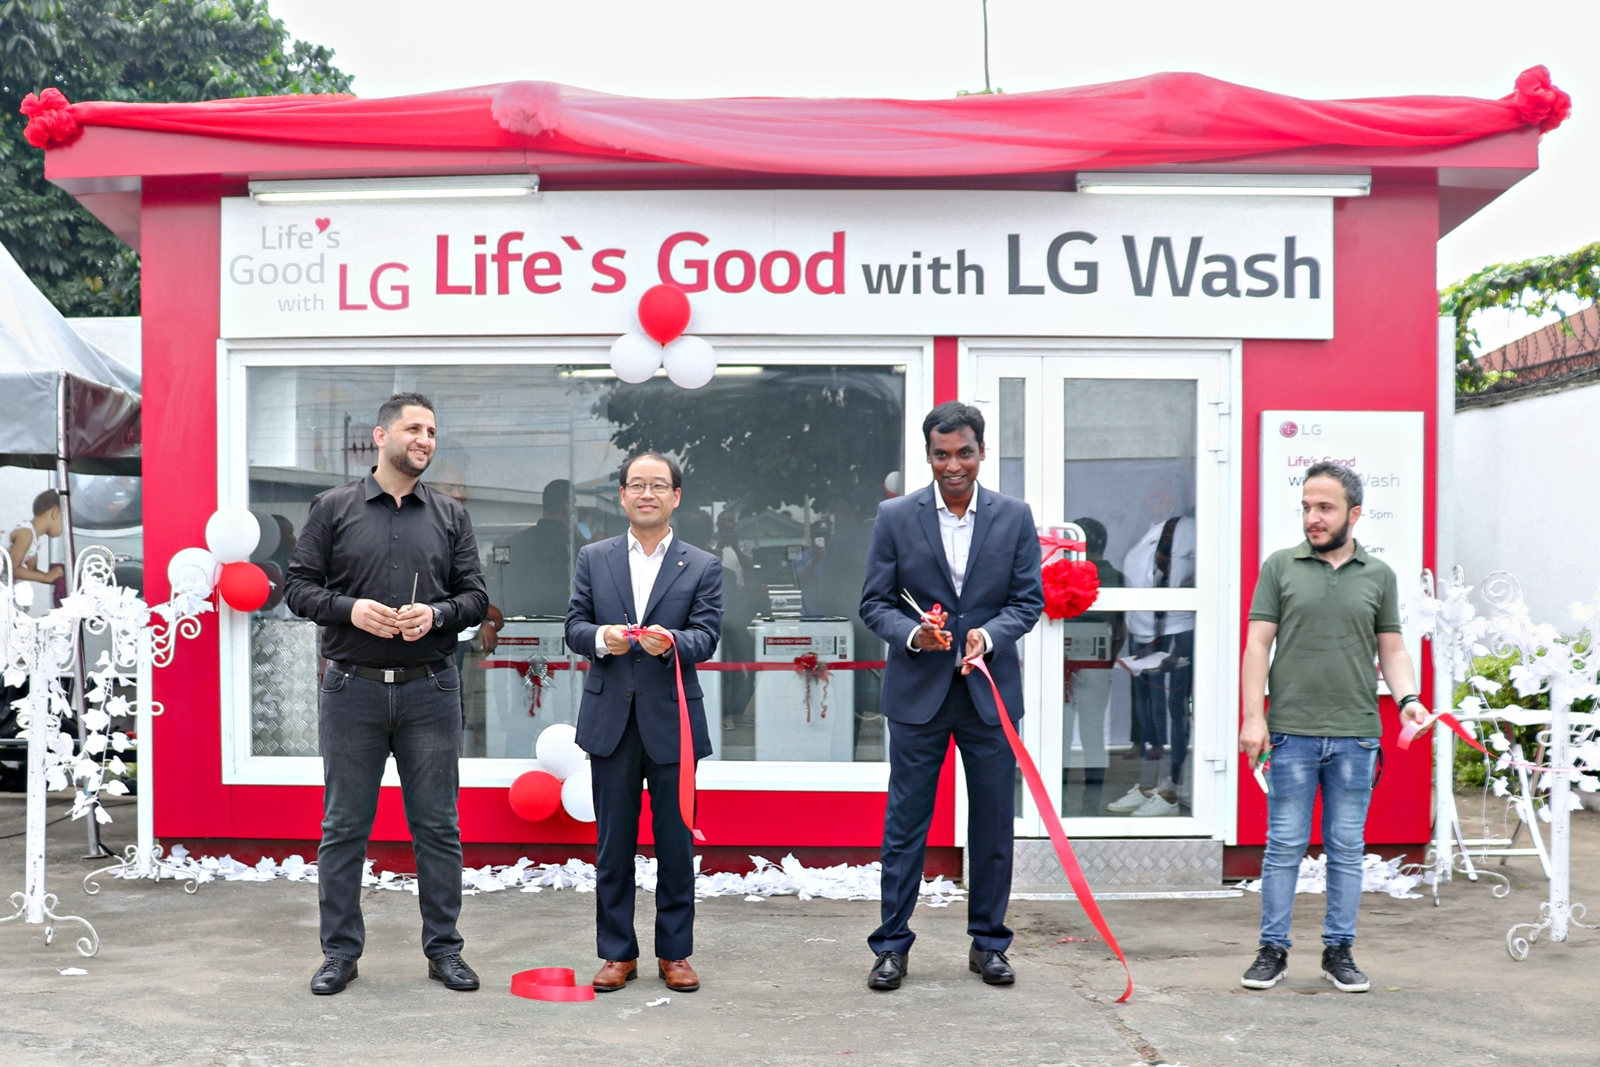 LG전자가 최근 나이지리아 음보음바 마을에 무료 세탁방인 ‘라이프스 굿 위드 LG 워시(Life’s Good with LG Wash)’를 열었다. 무료 세탁방 개소식에서 관계자들이 테이프 커팅을 하고 있다.